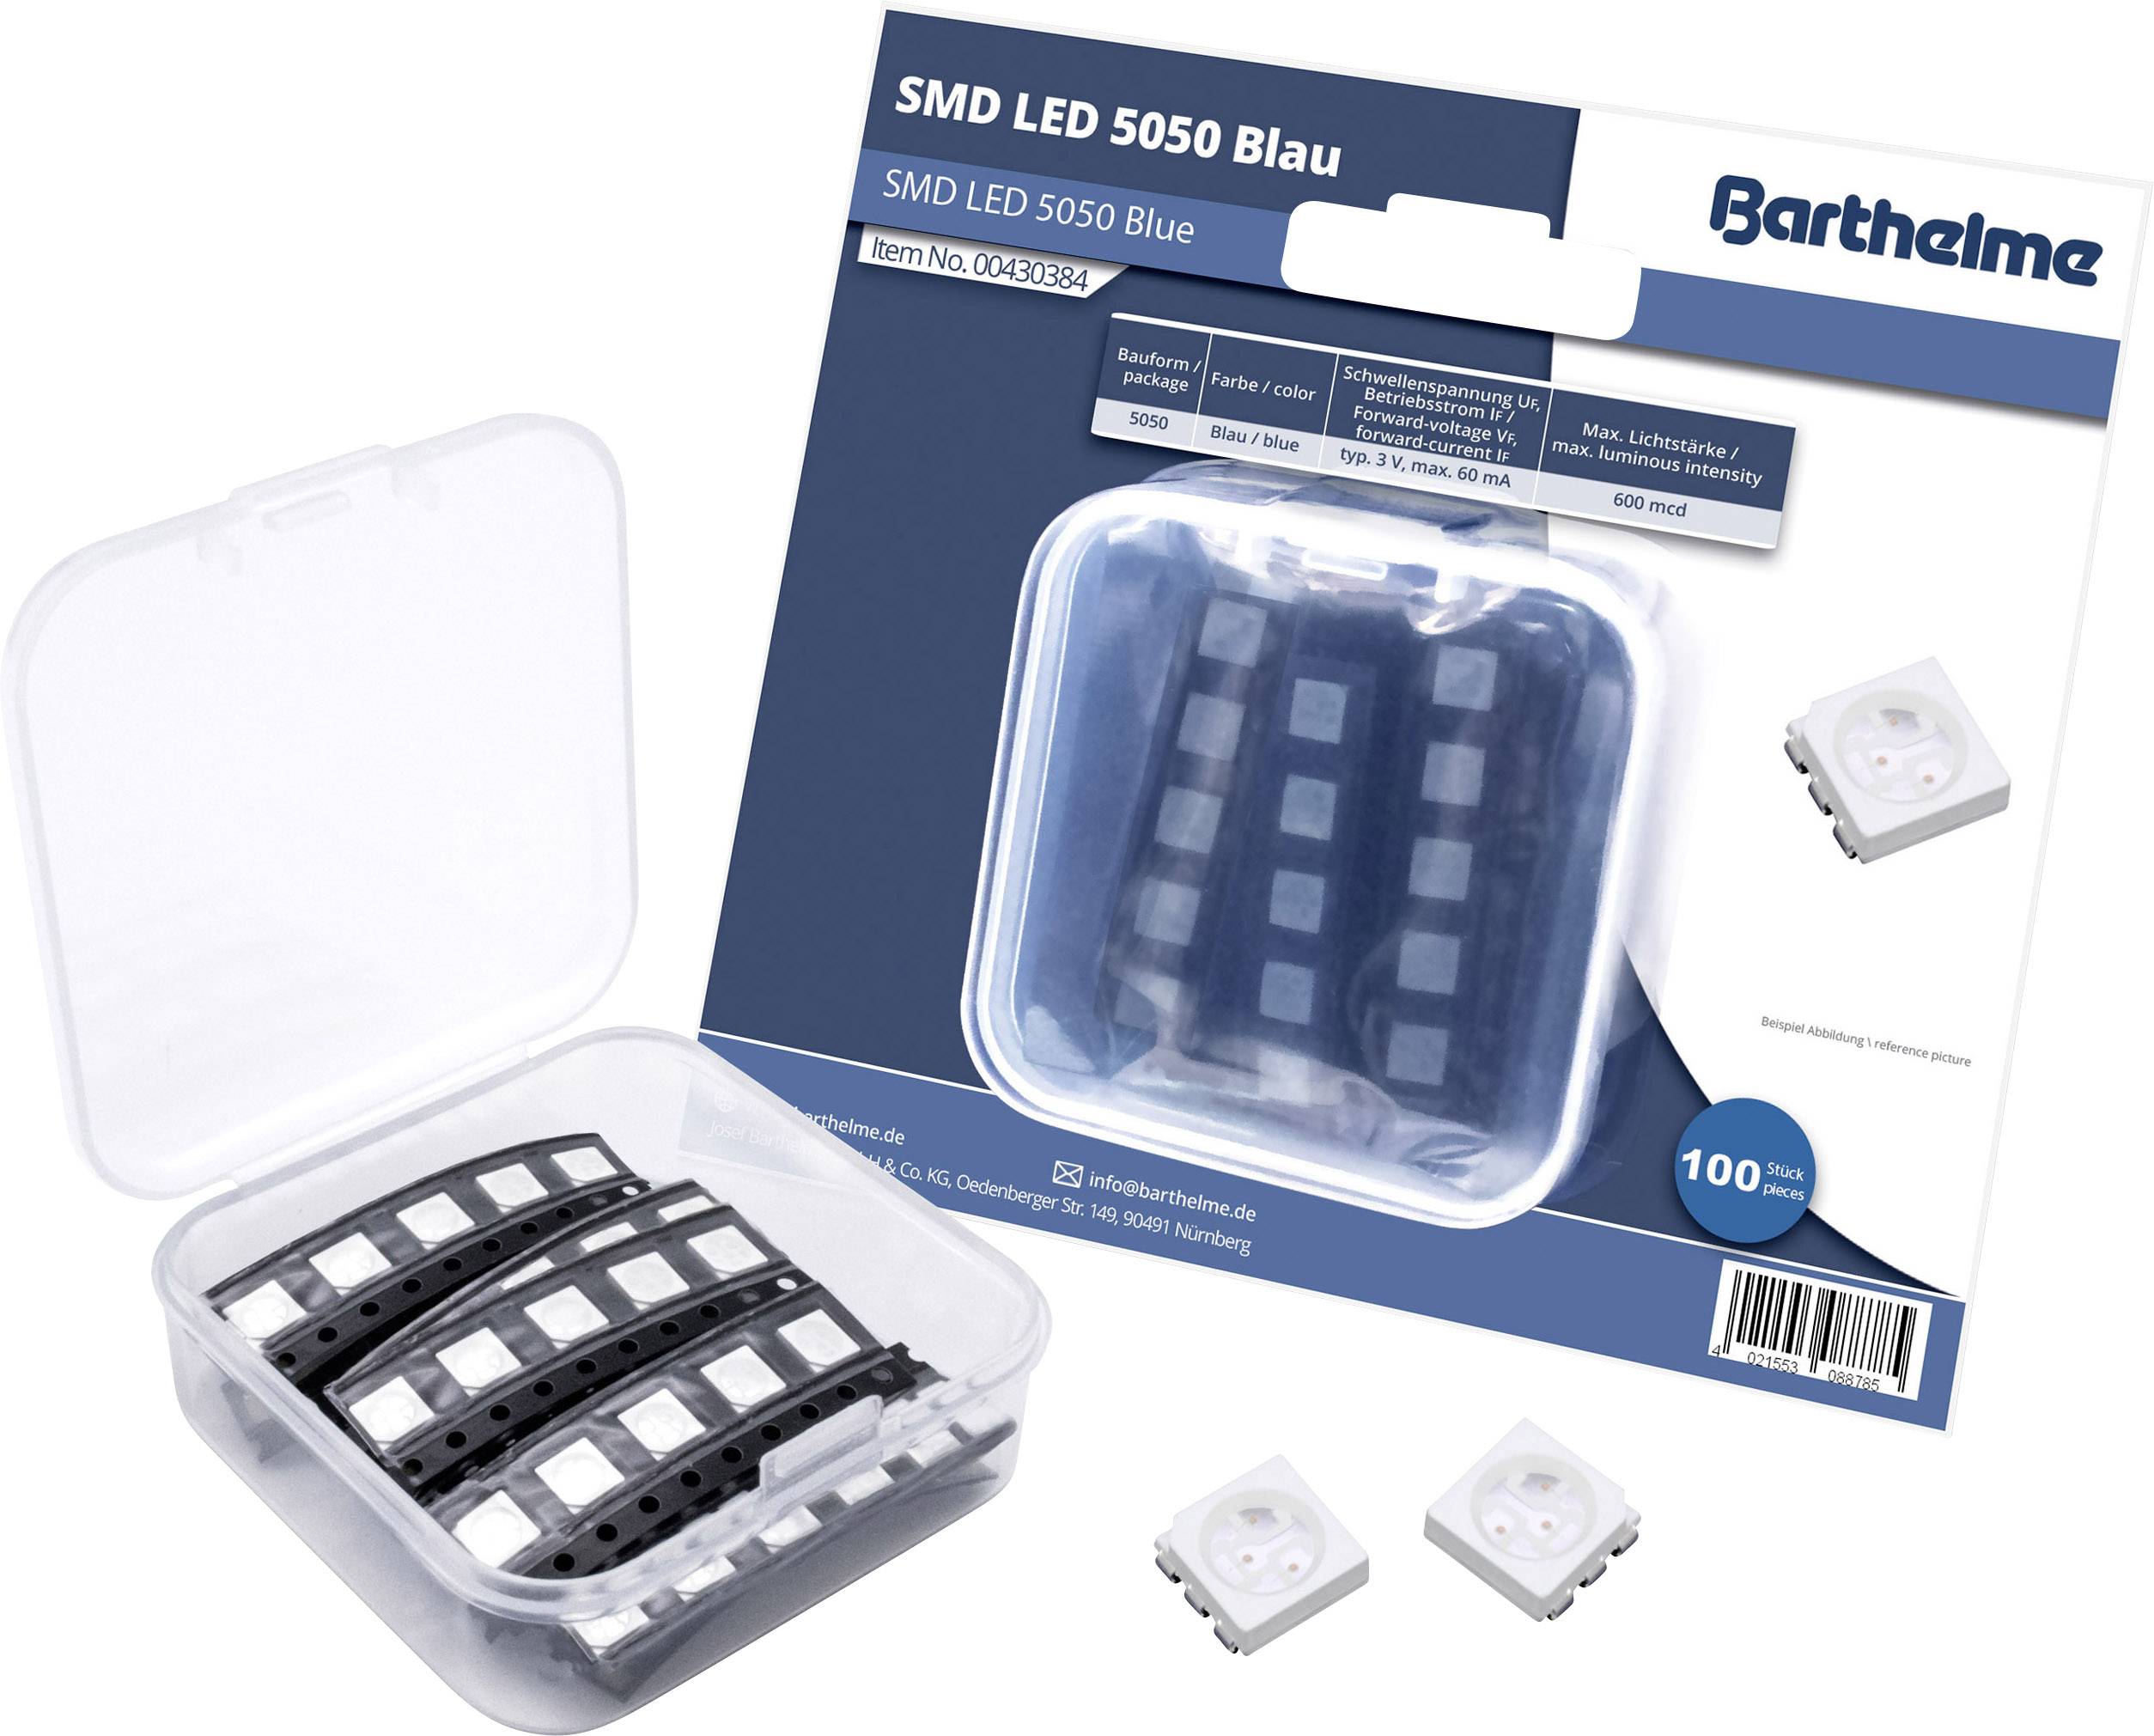 BARTHELME SMD-LED 5050 Blau 600 mcd 120 ° 60 mA 3 V Bulk